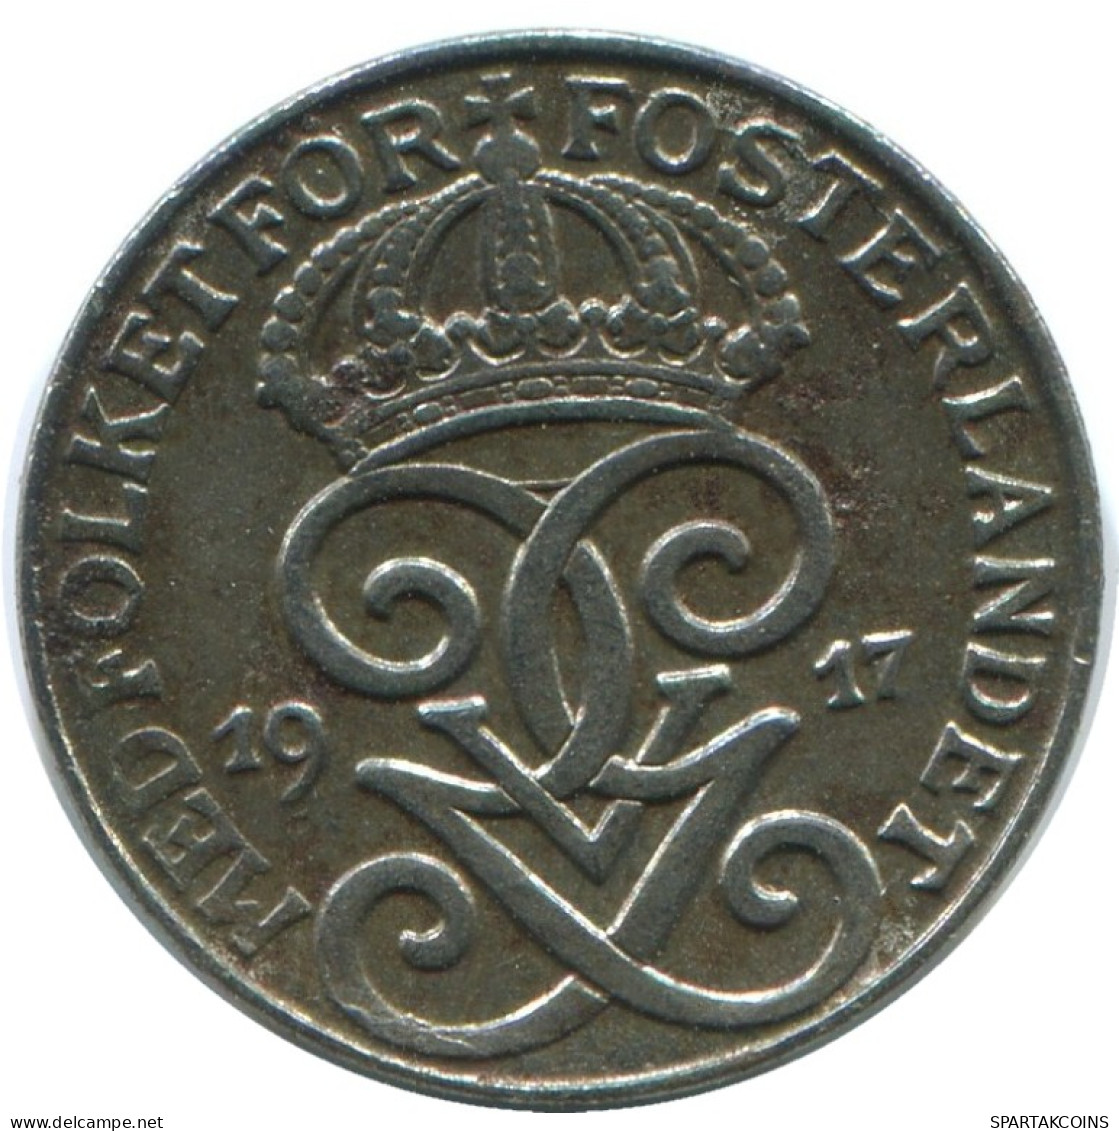 1 ORE 1917 SWEDEN Coin #AD157.2.U.A - Sweden